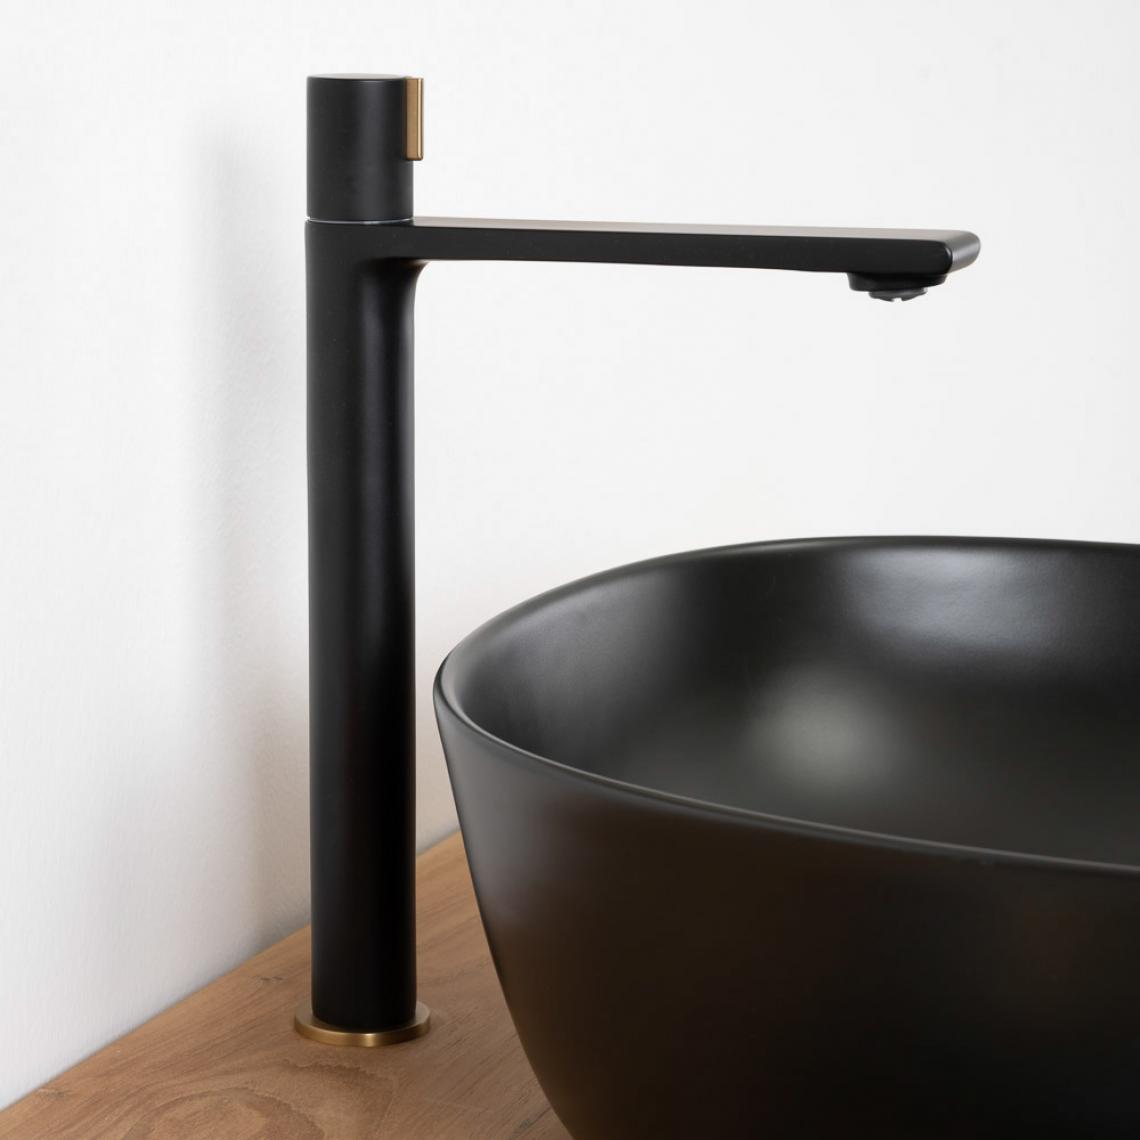 Wanda Collection - Robinet lavabo mitigeur progressif Tamise black - Robinet de lavabo